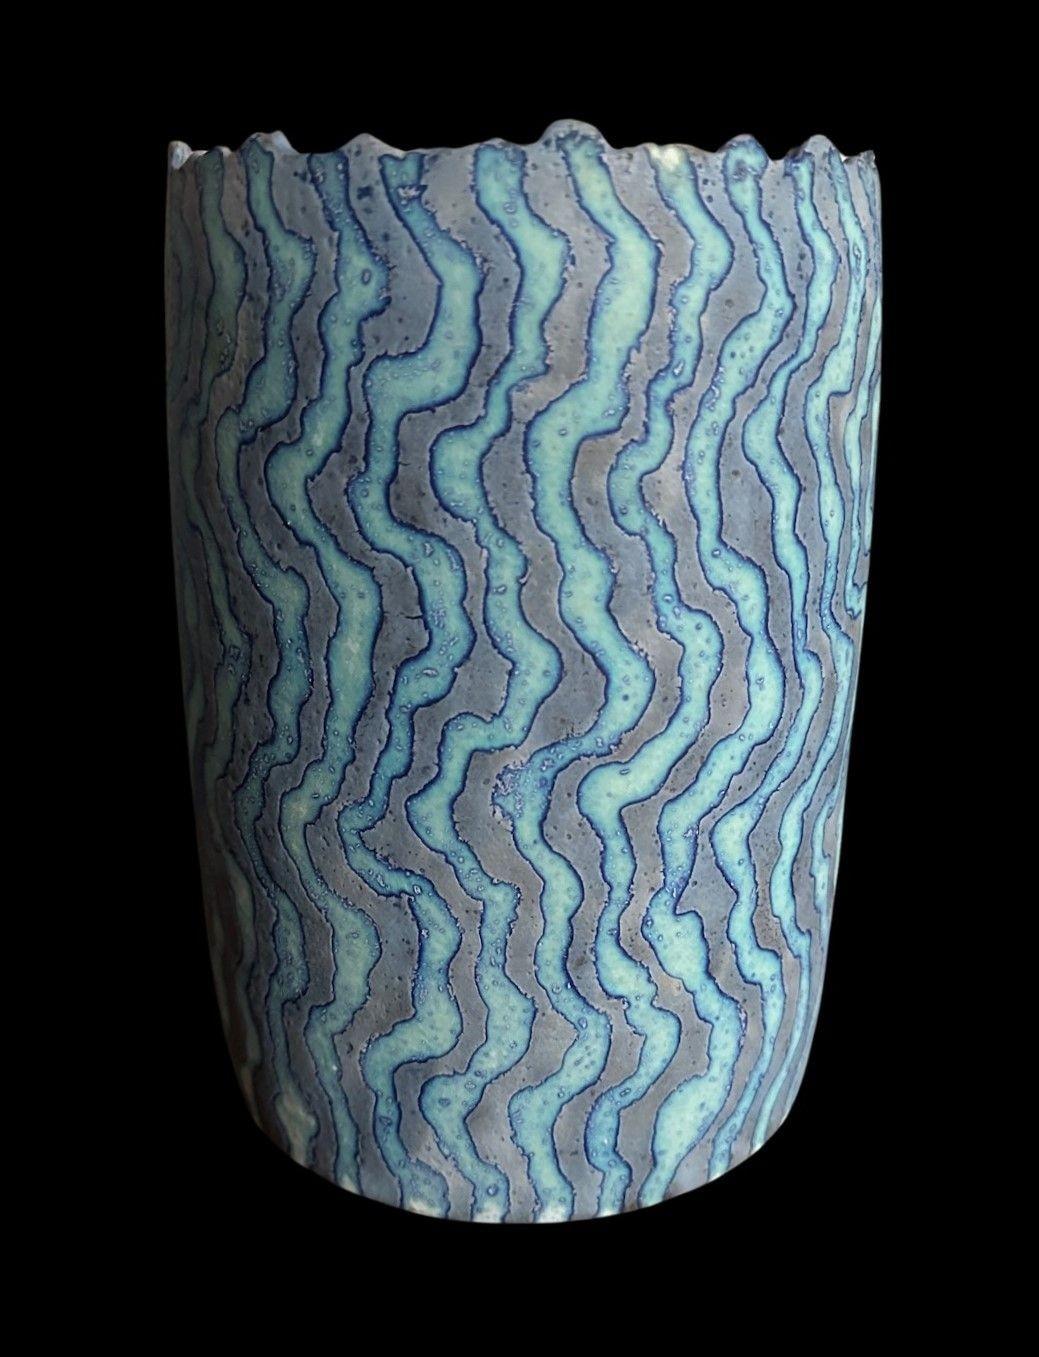 PB 36
Peter Beard Conical Vase in a Wax Resist Glaze
2024
24cm high, 15.5cm wide